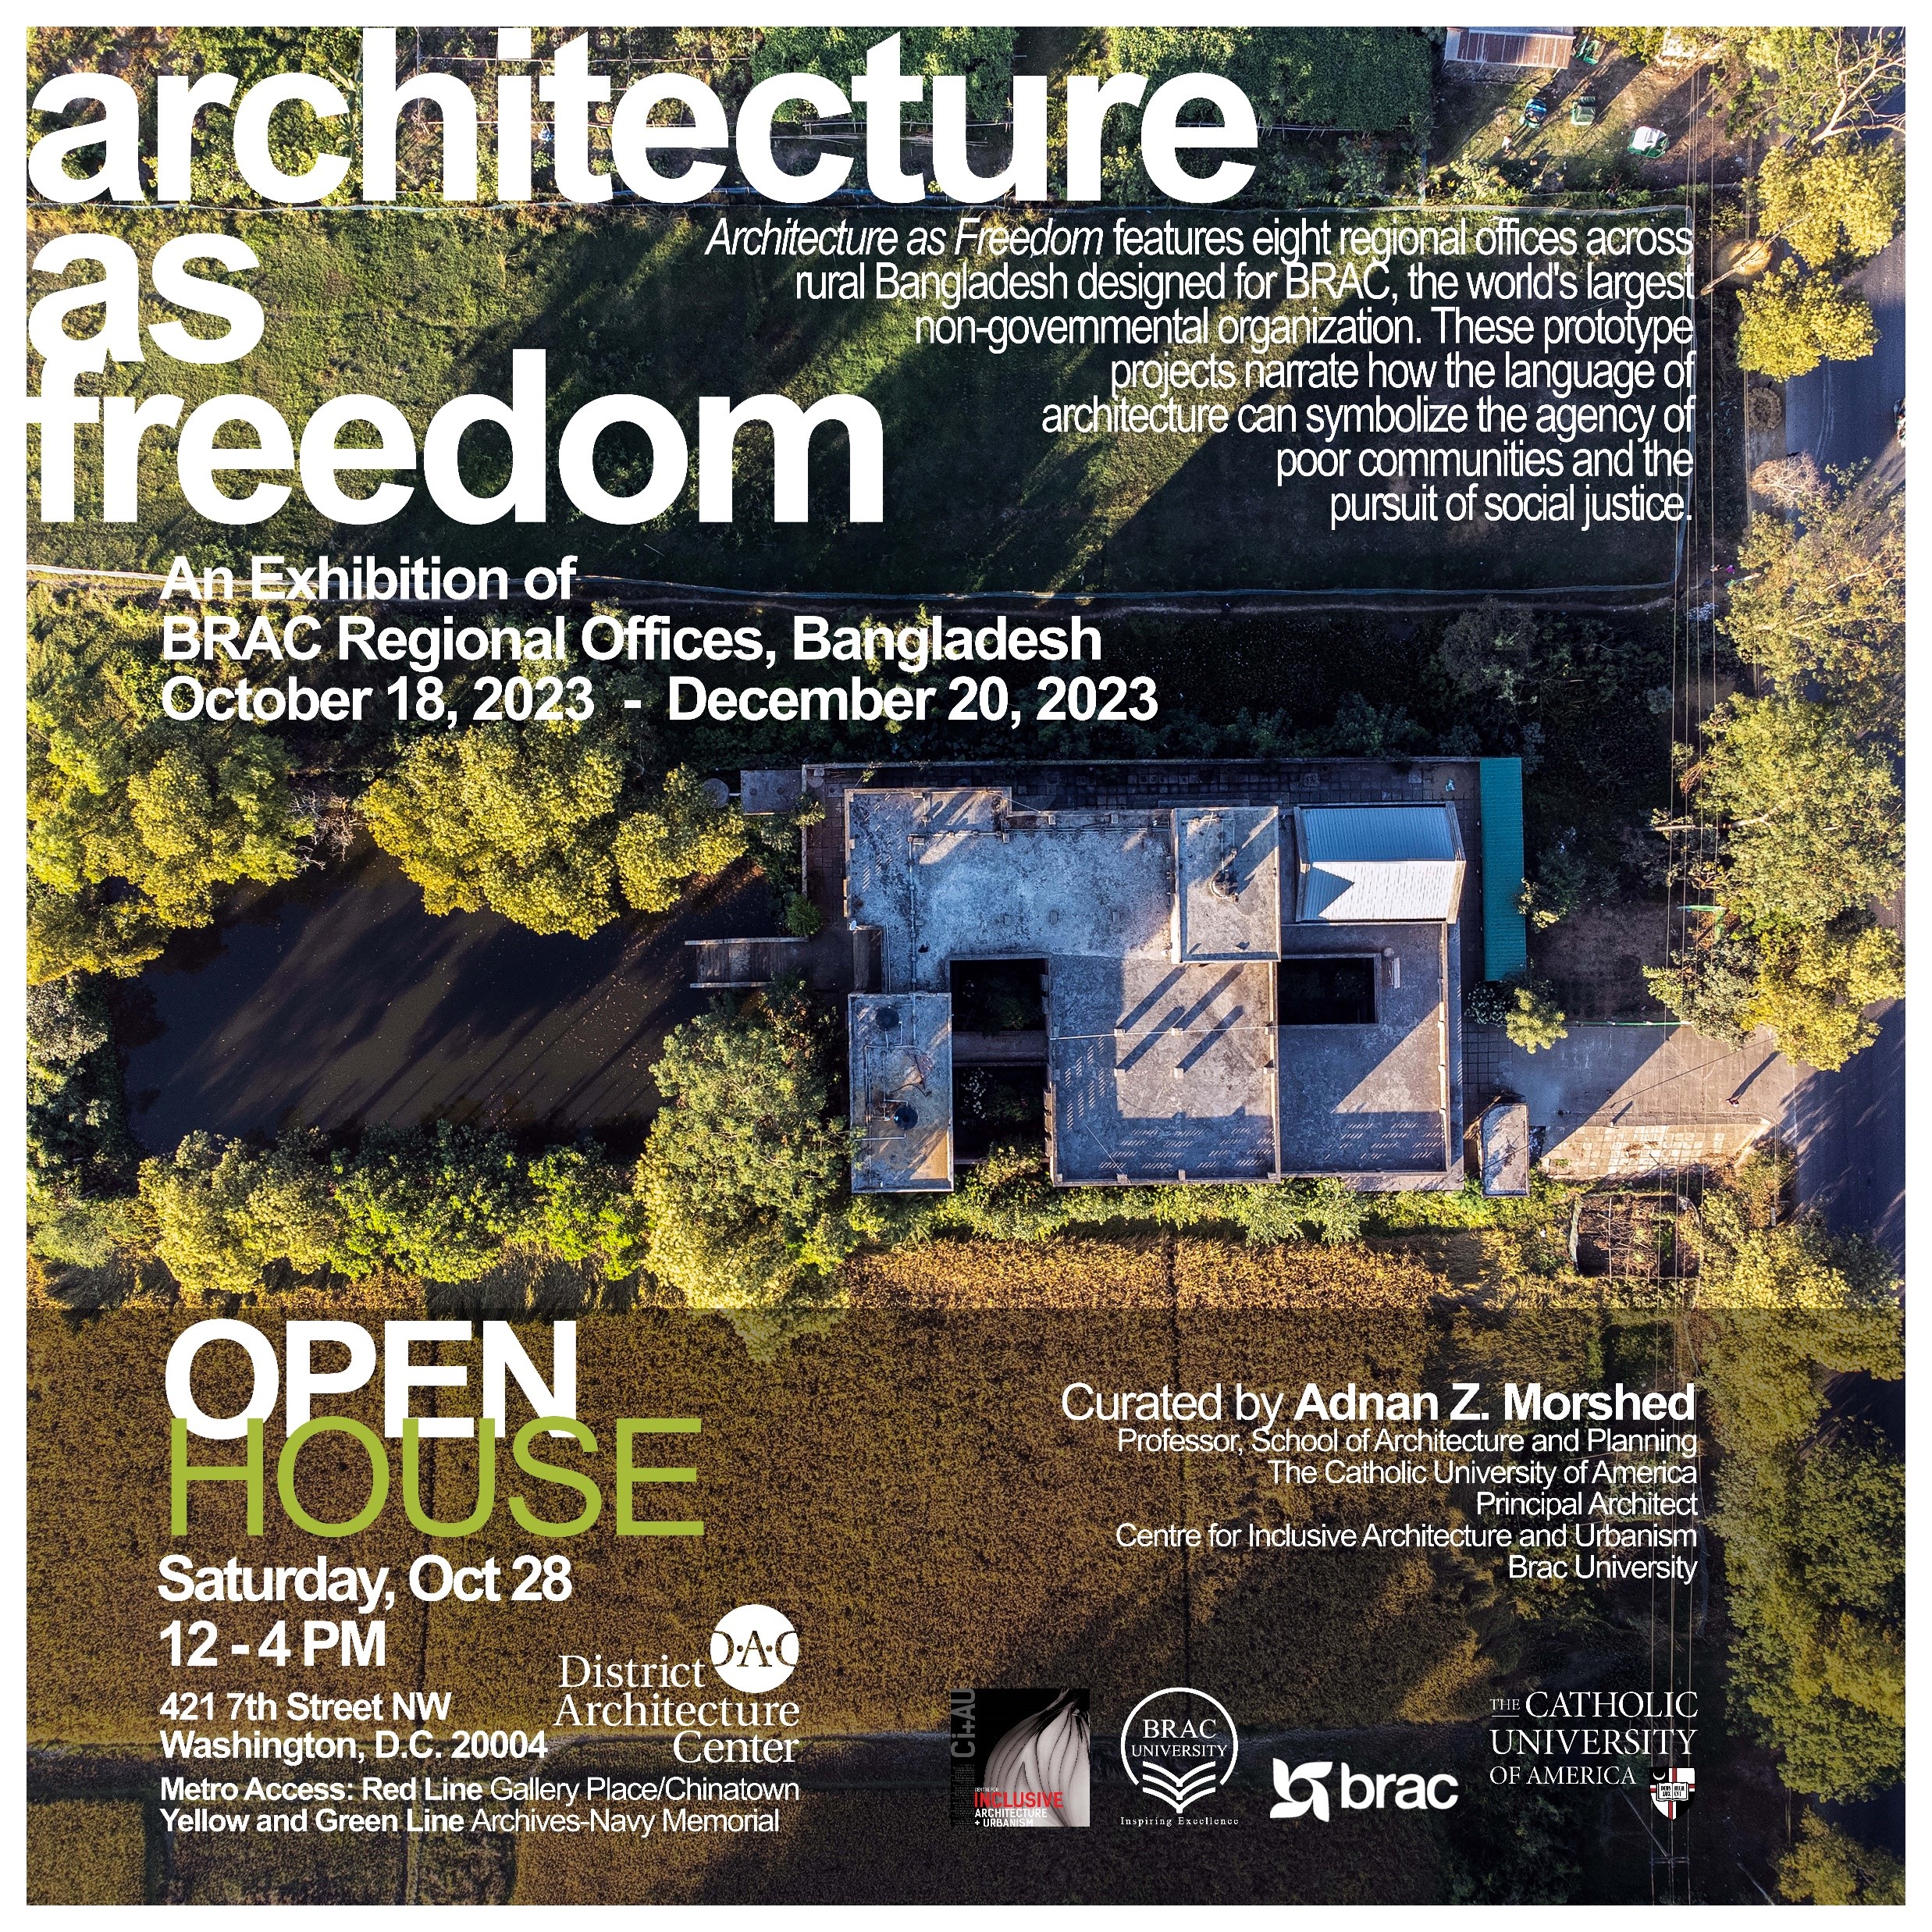 CHETONA VOL. 04 Issue 052 :  BRAC BUILDING EXHIBITION: ARCHITECTURE AS FREEDOM